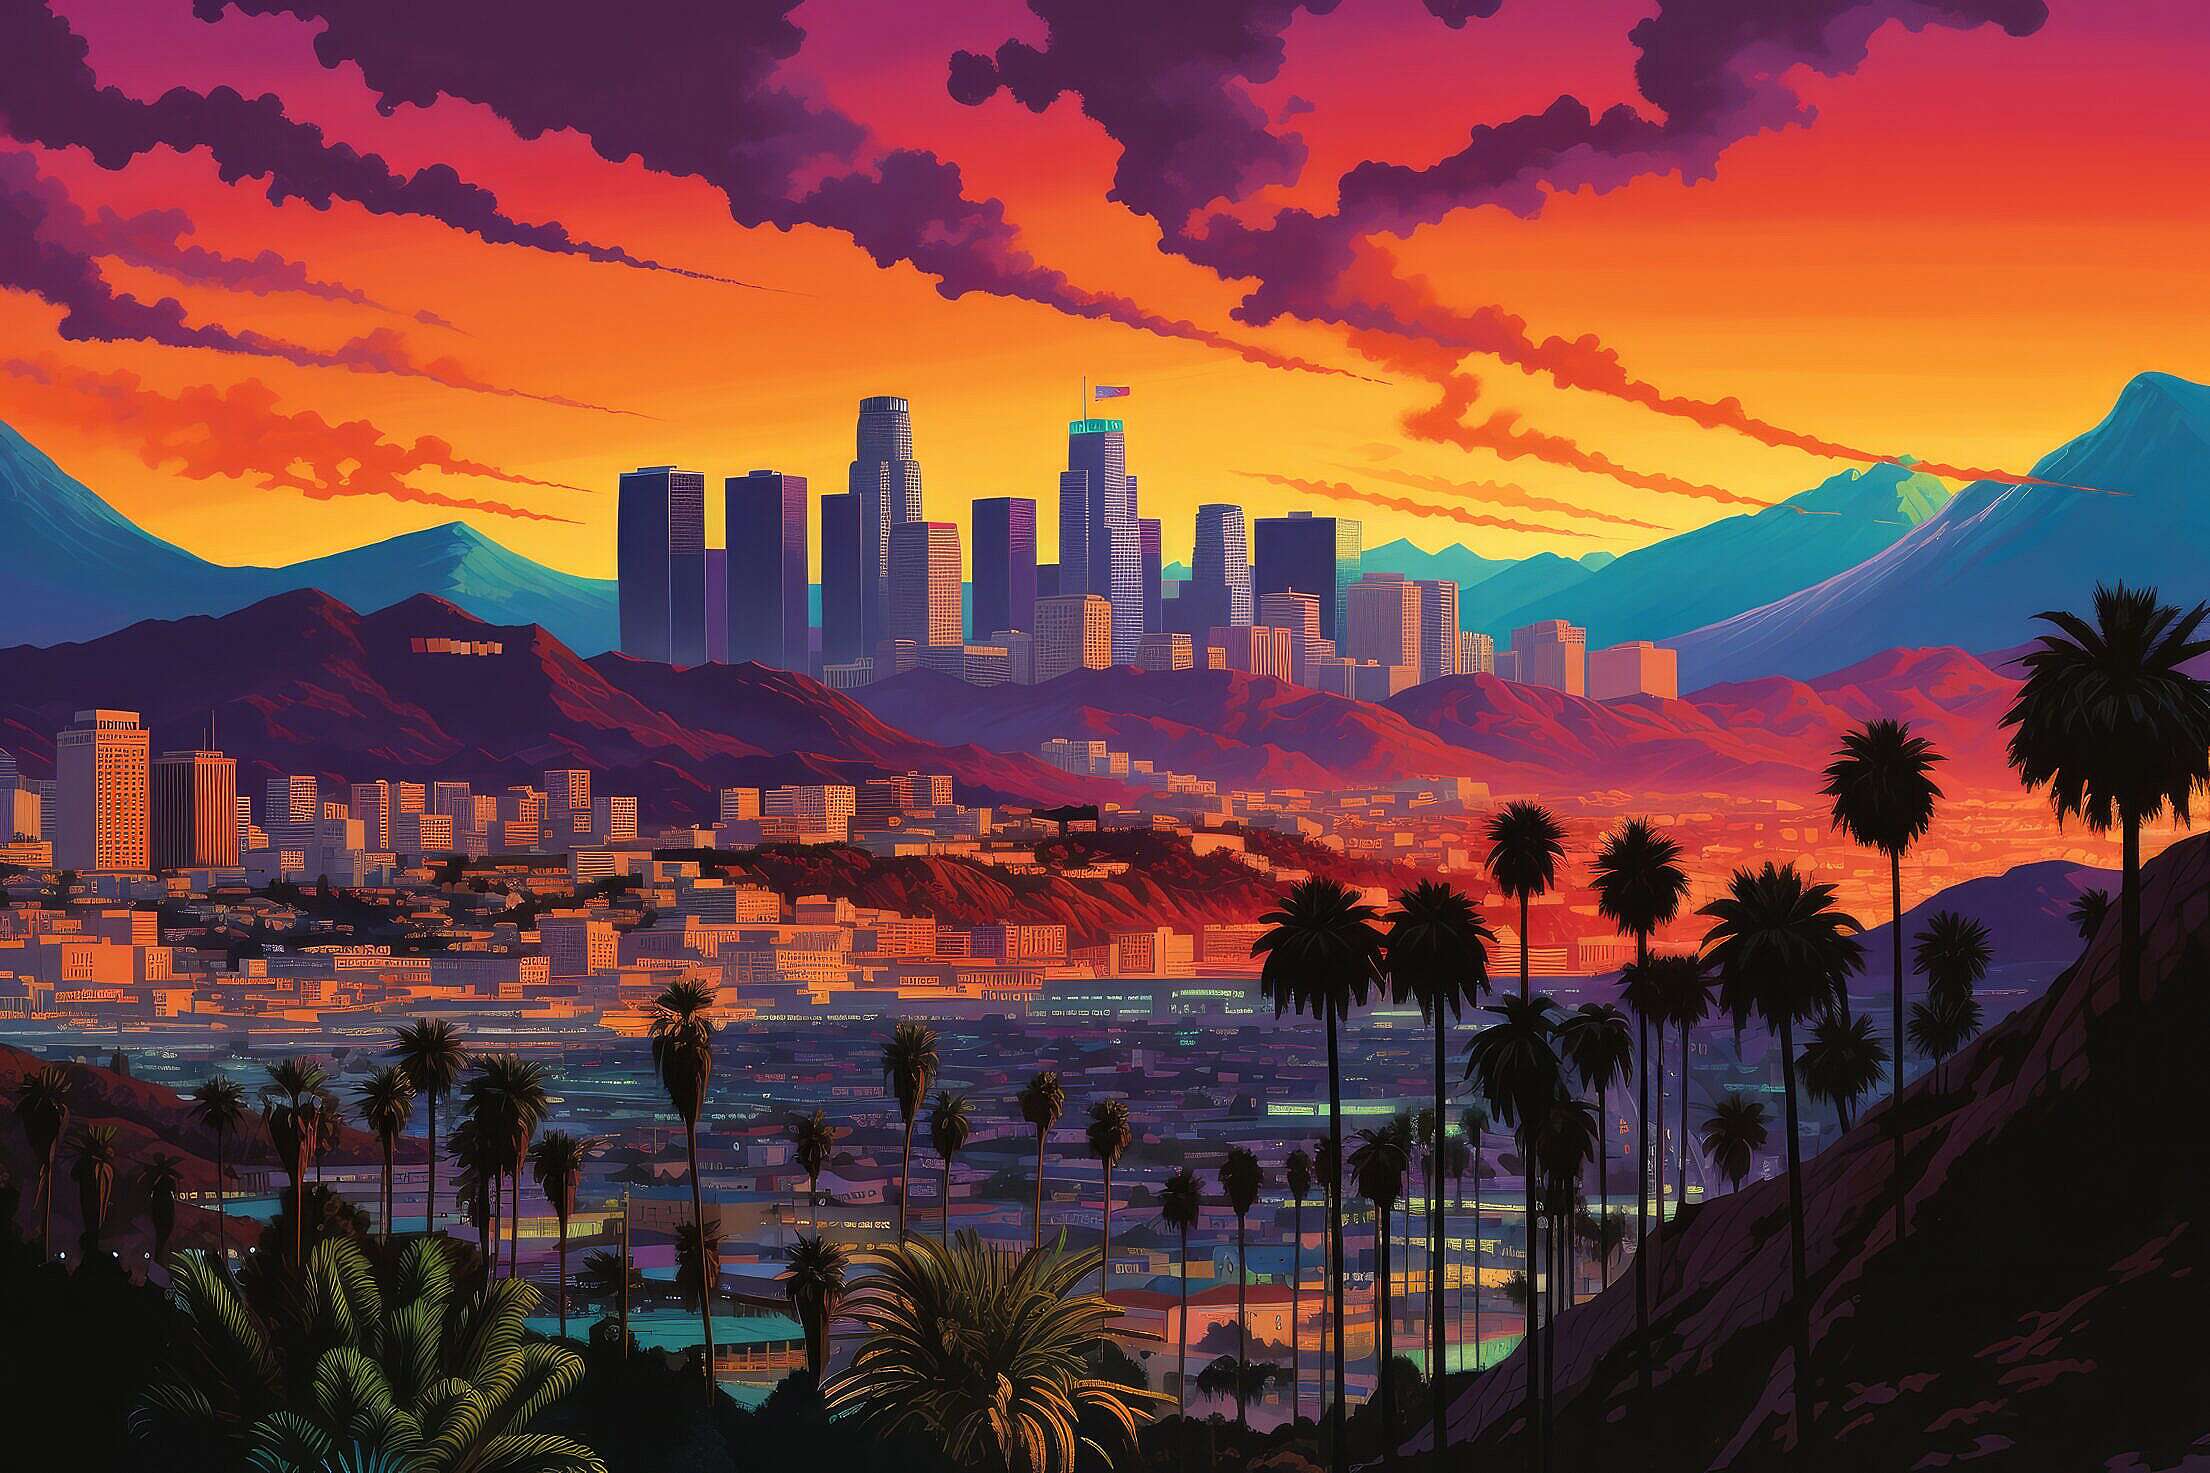 Los Angeles Painting Free Stock Photo | picjumbo